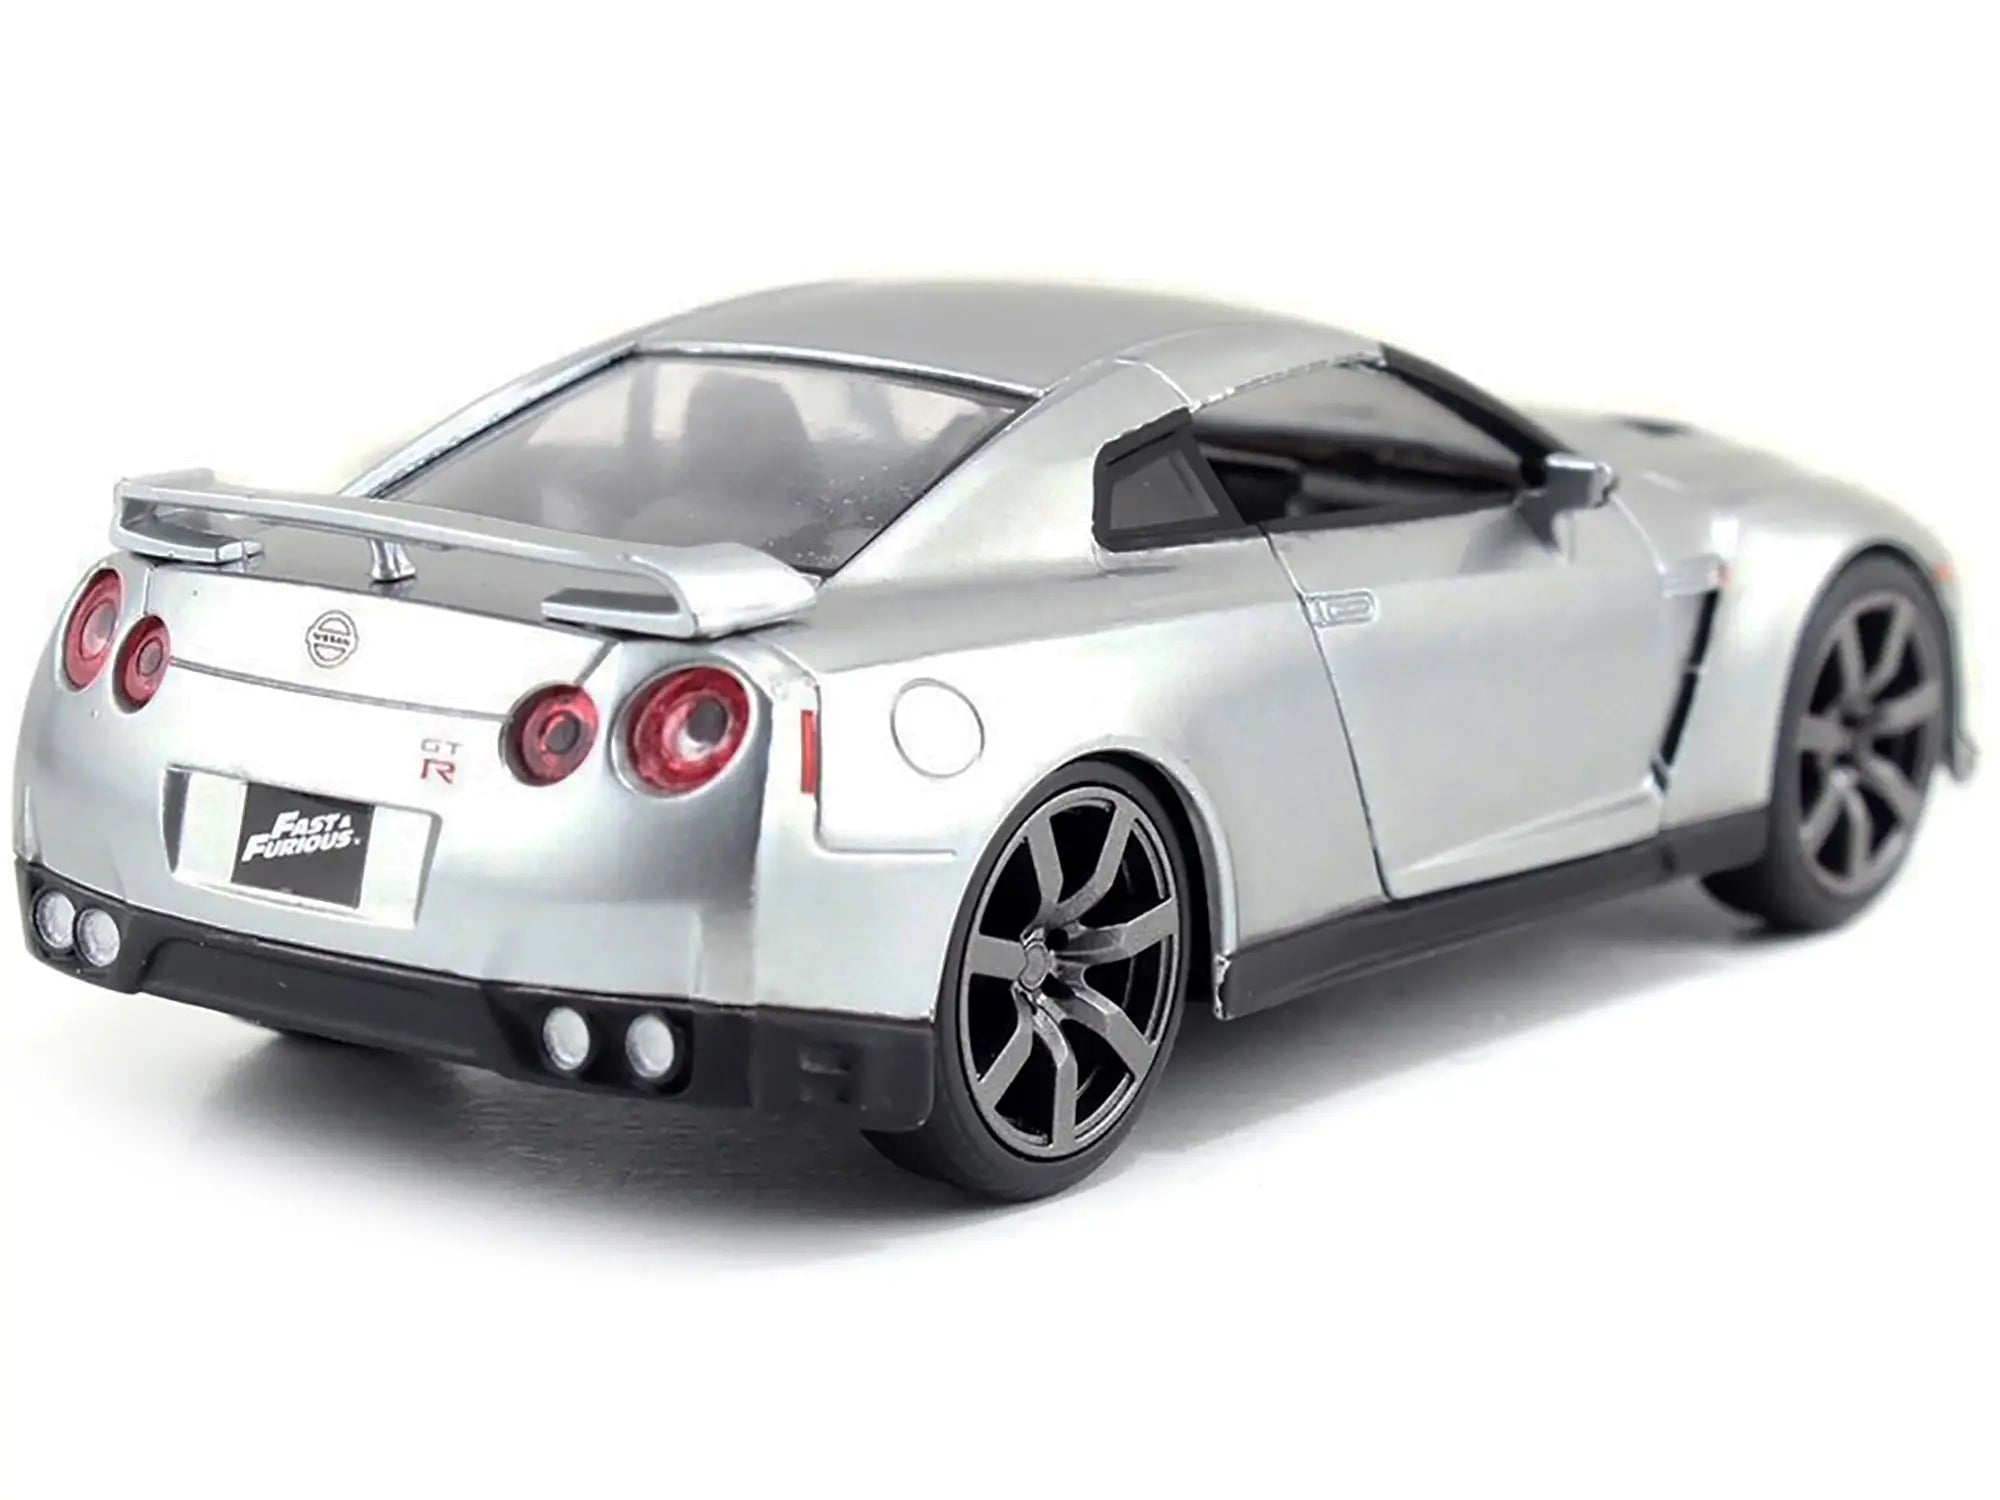 Brian's Nissan GT-R (R35) Silver Metallic "Fast & Furious" Movie 1/32 Diecast Model Car by Jada Jada